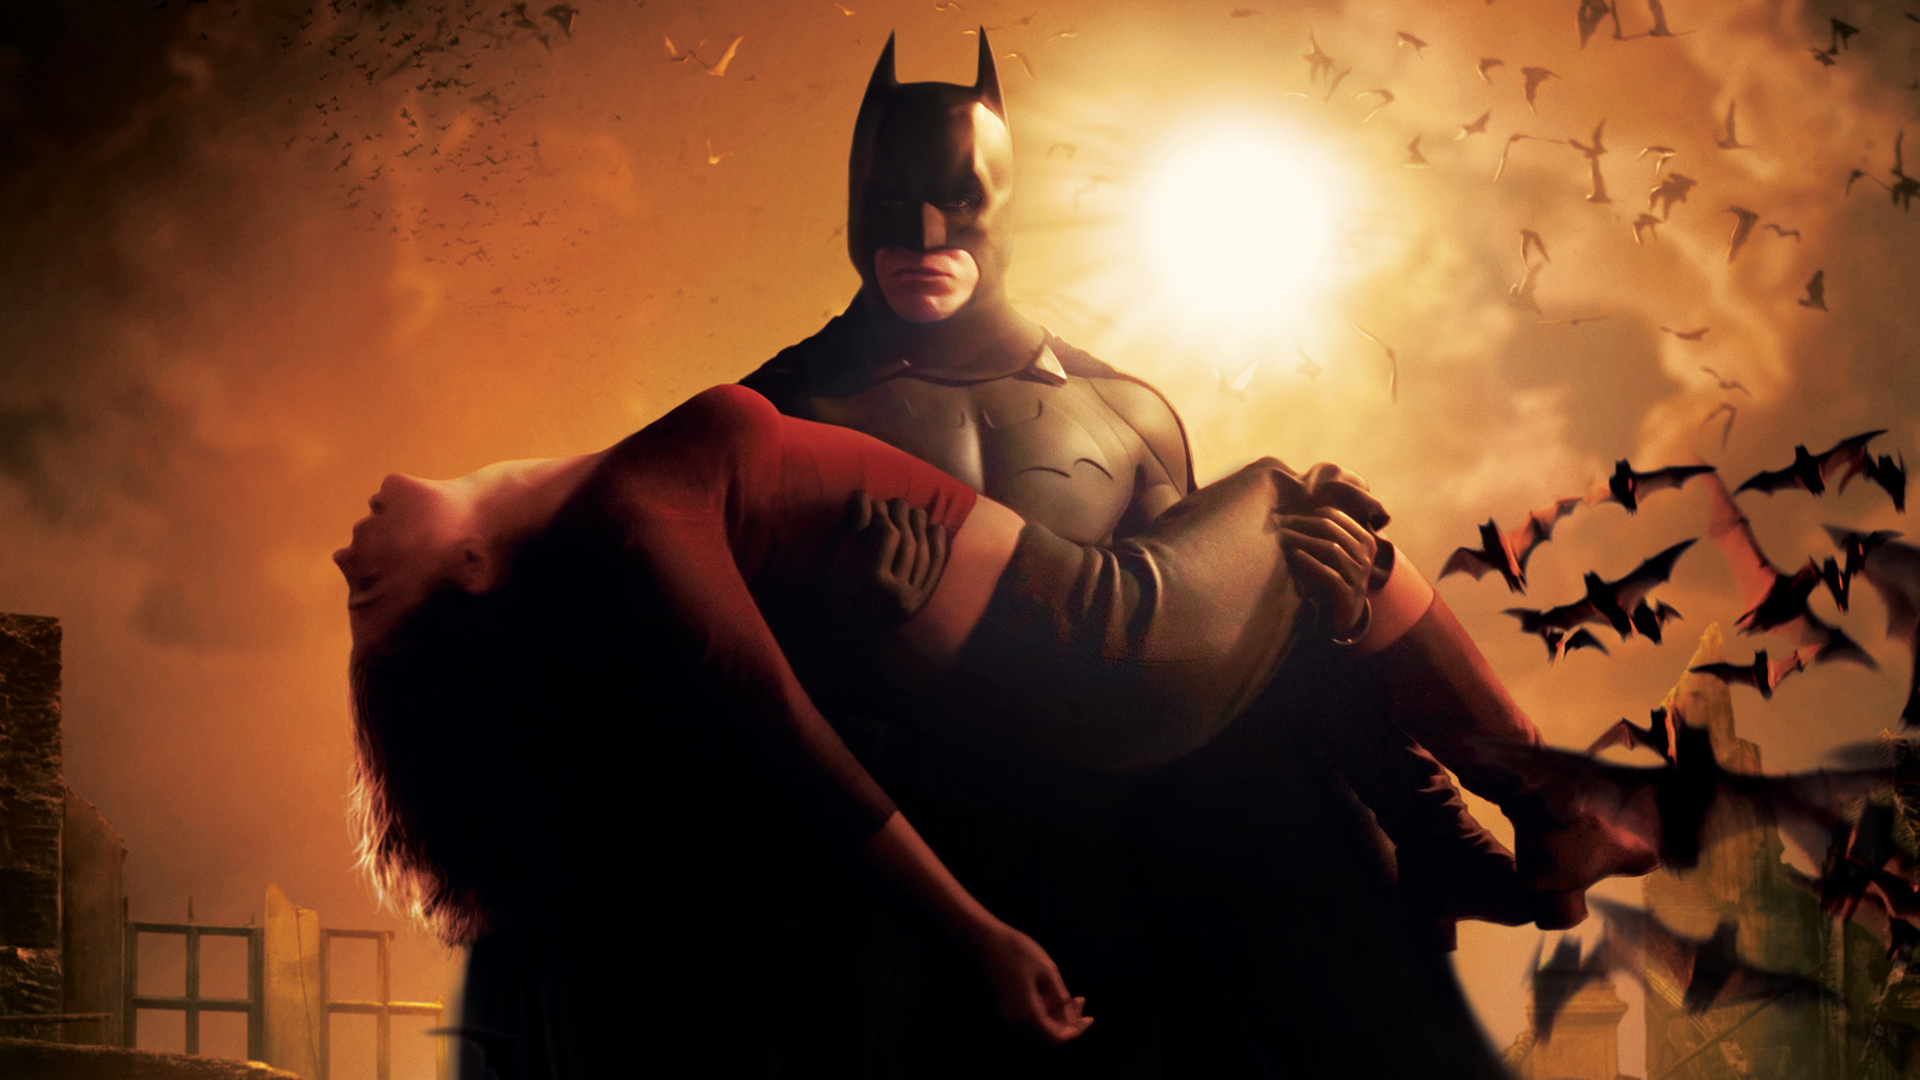 Batman Begins Wallpaper Hd For Desktop Full Screen 1080p : 